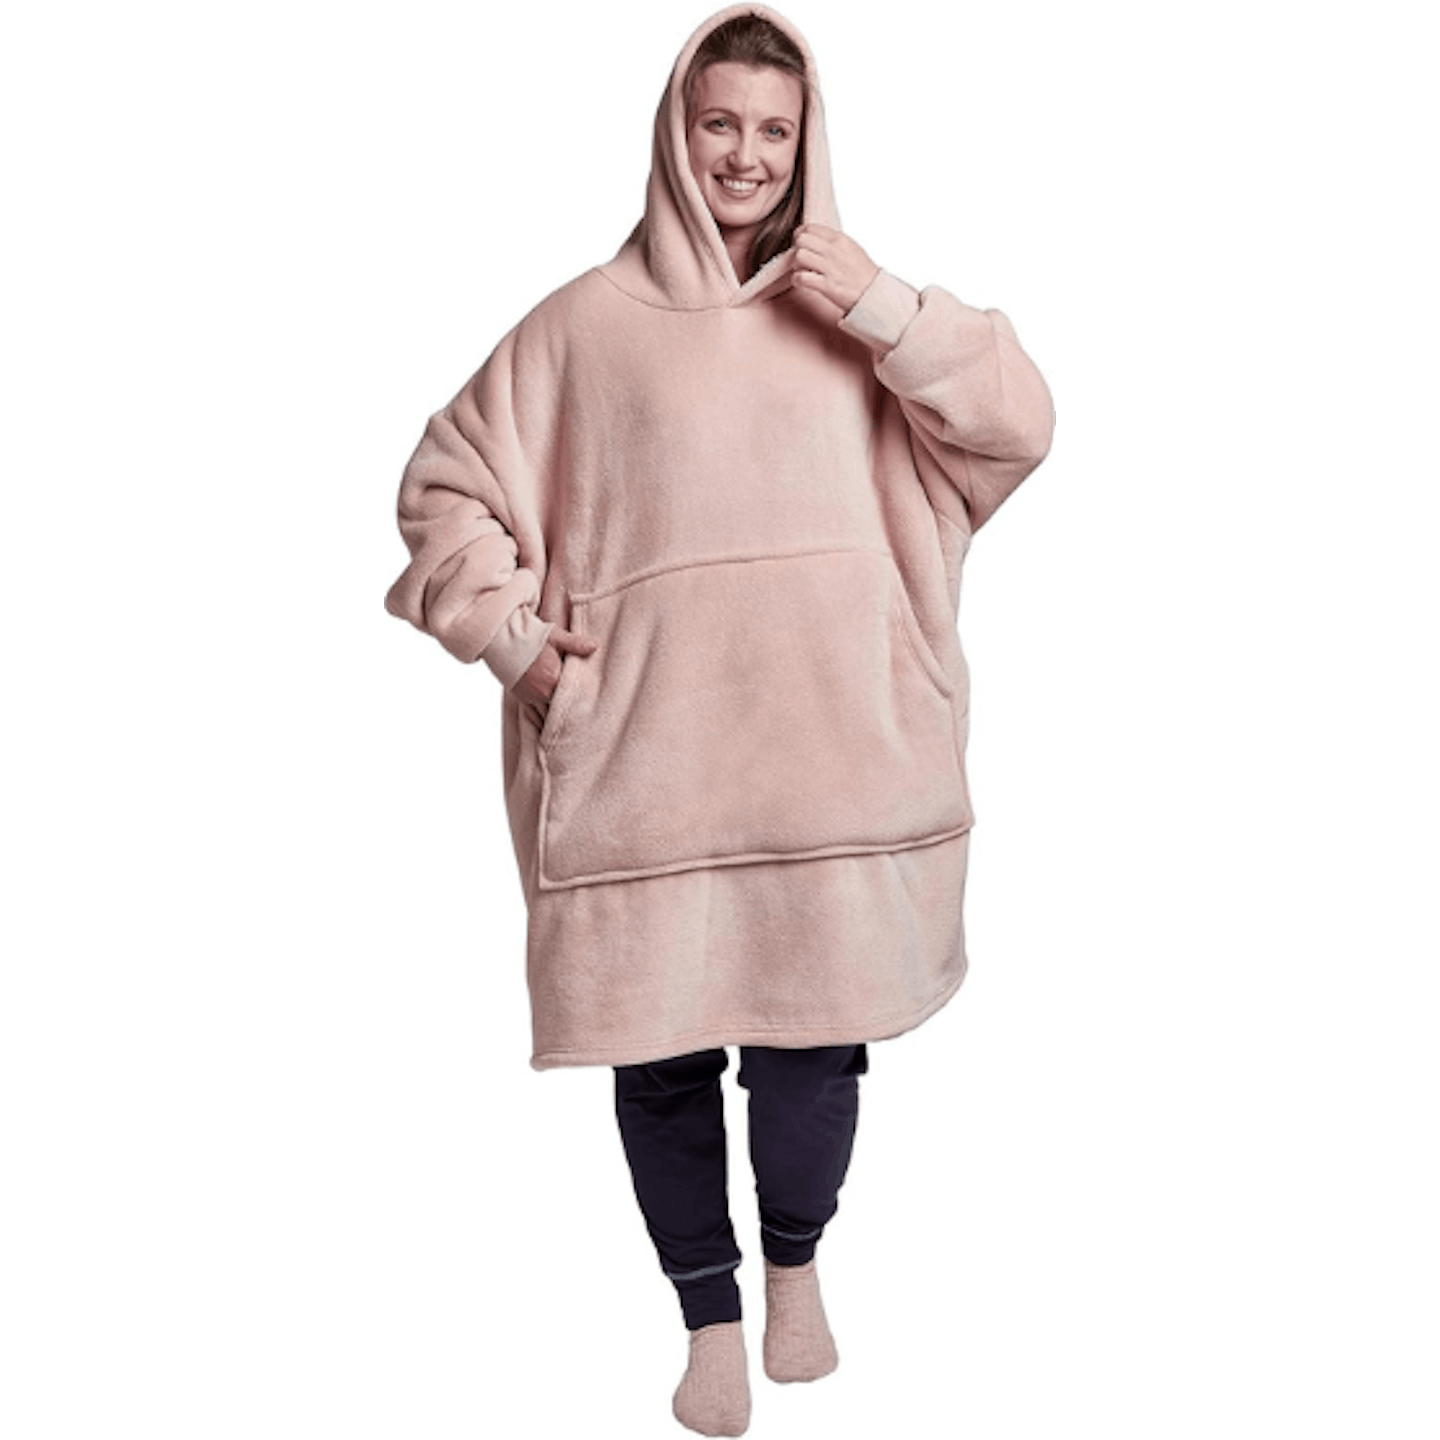 Laura Anderson best buys Snugsie fleece